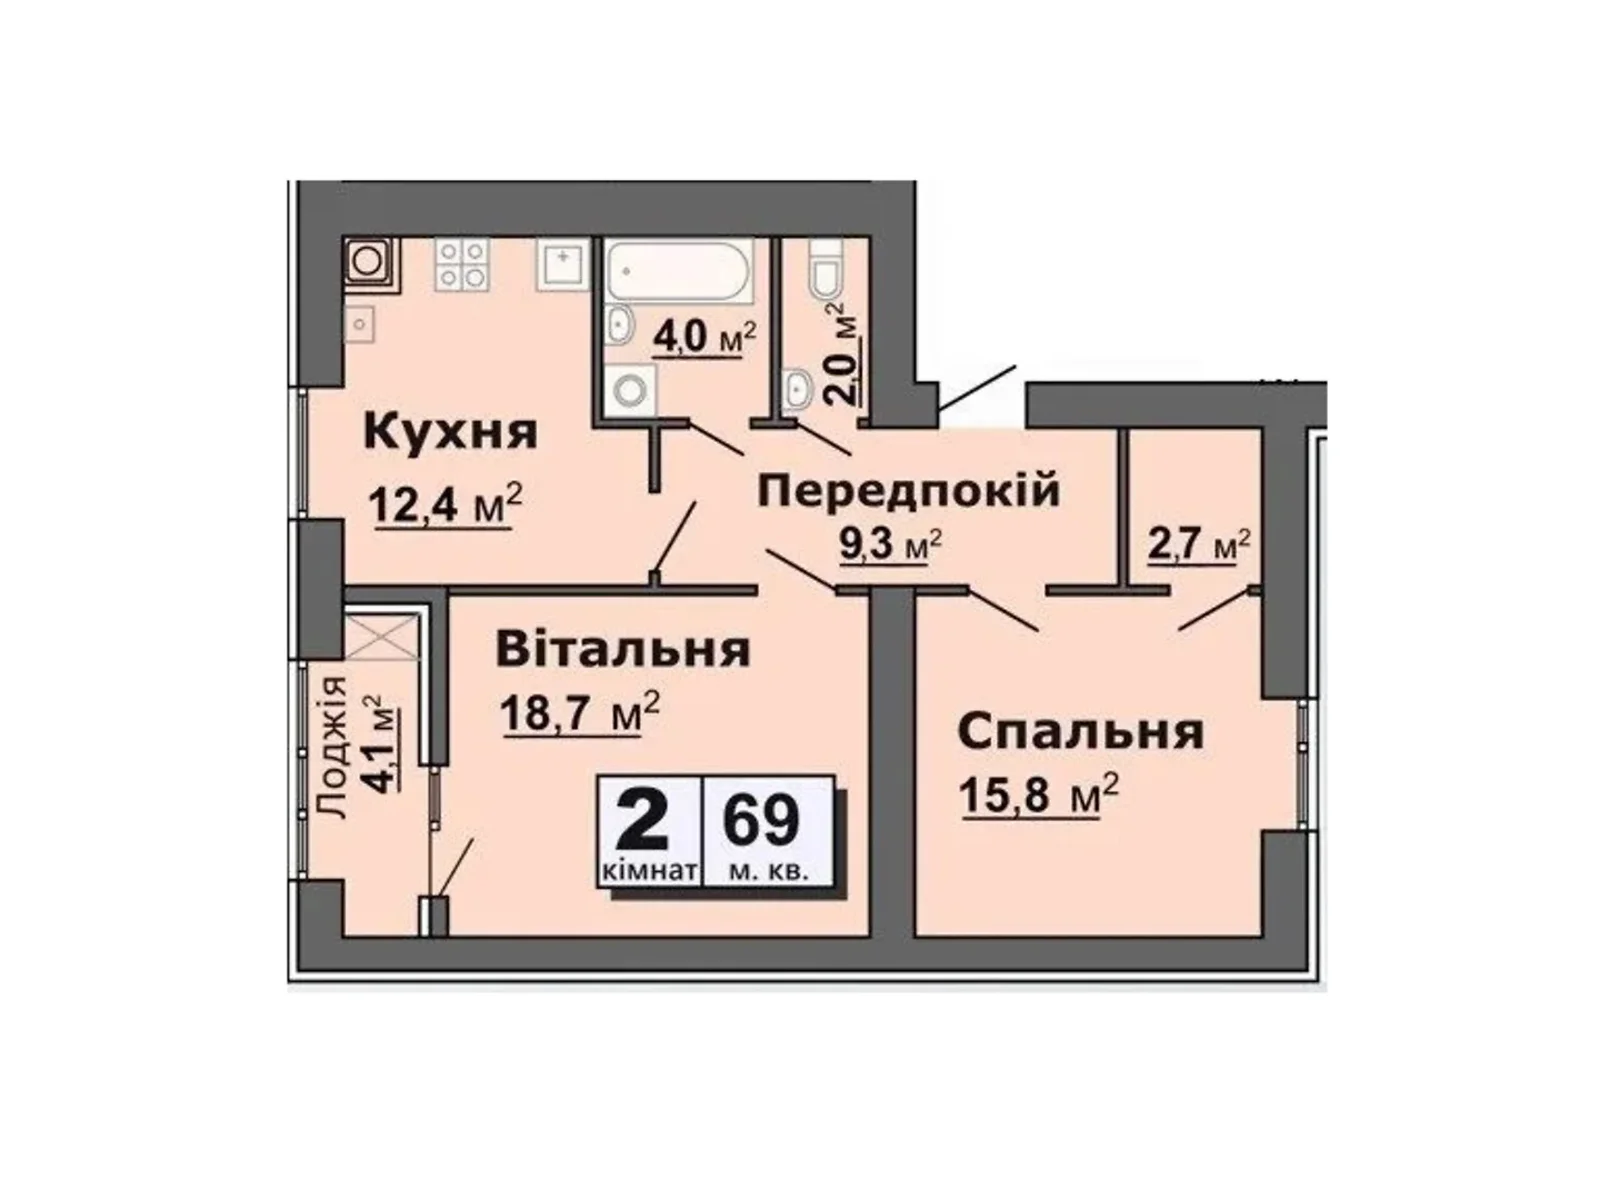 2-кімнатна квартира 69 кв. м у Луцьку, цена: 58871 $